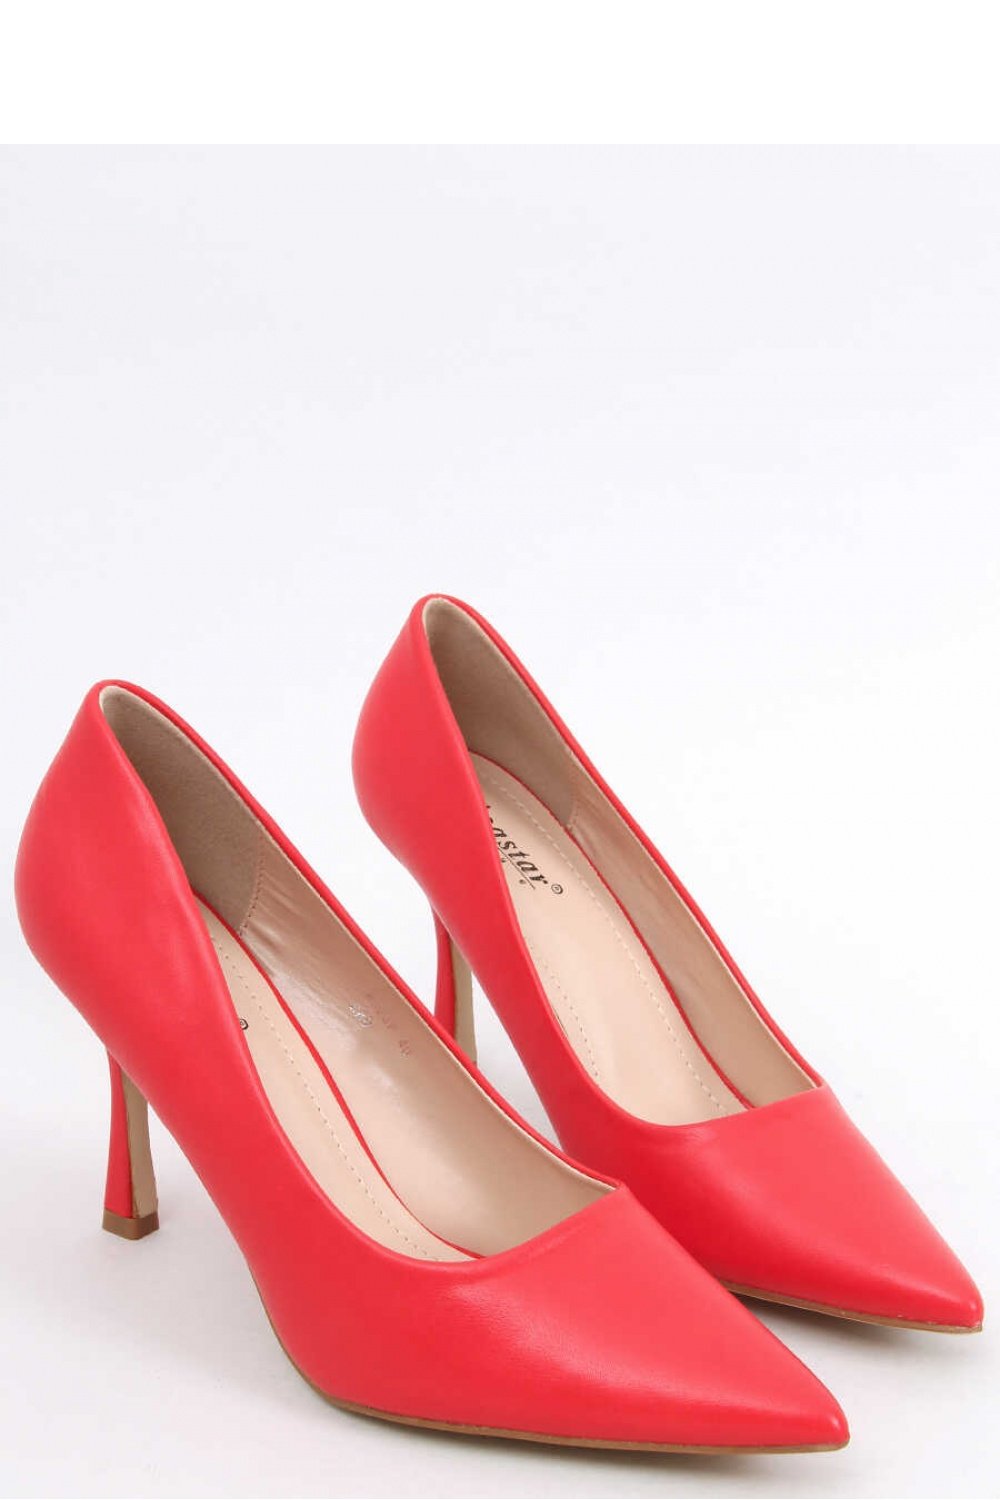 High heels model 163939 Inello Posh Styles Apparel